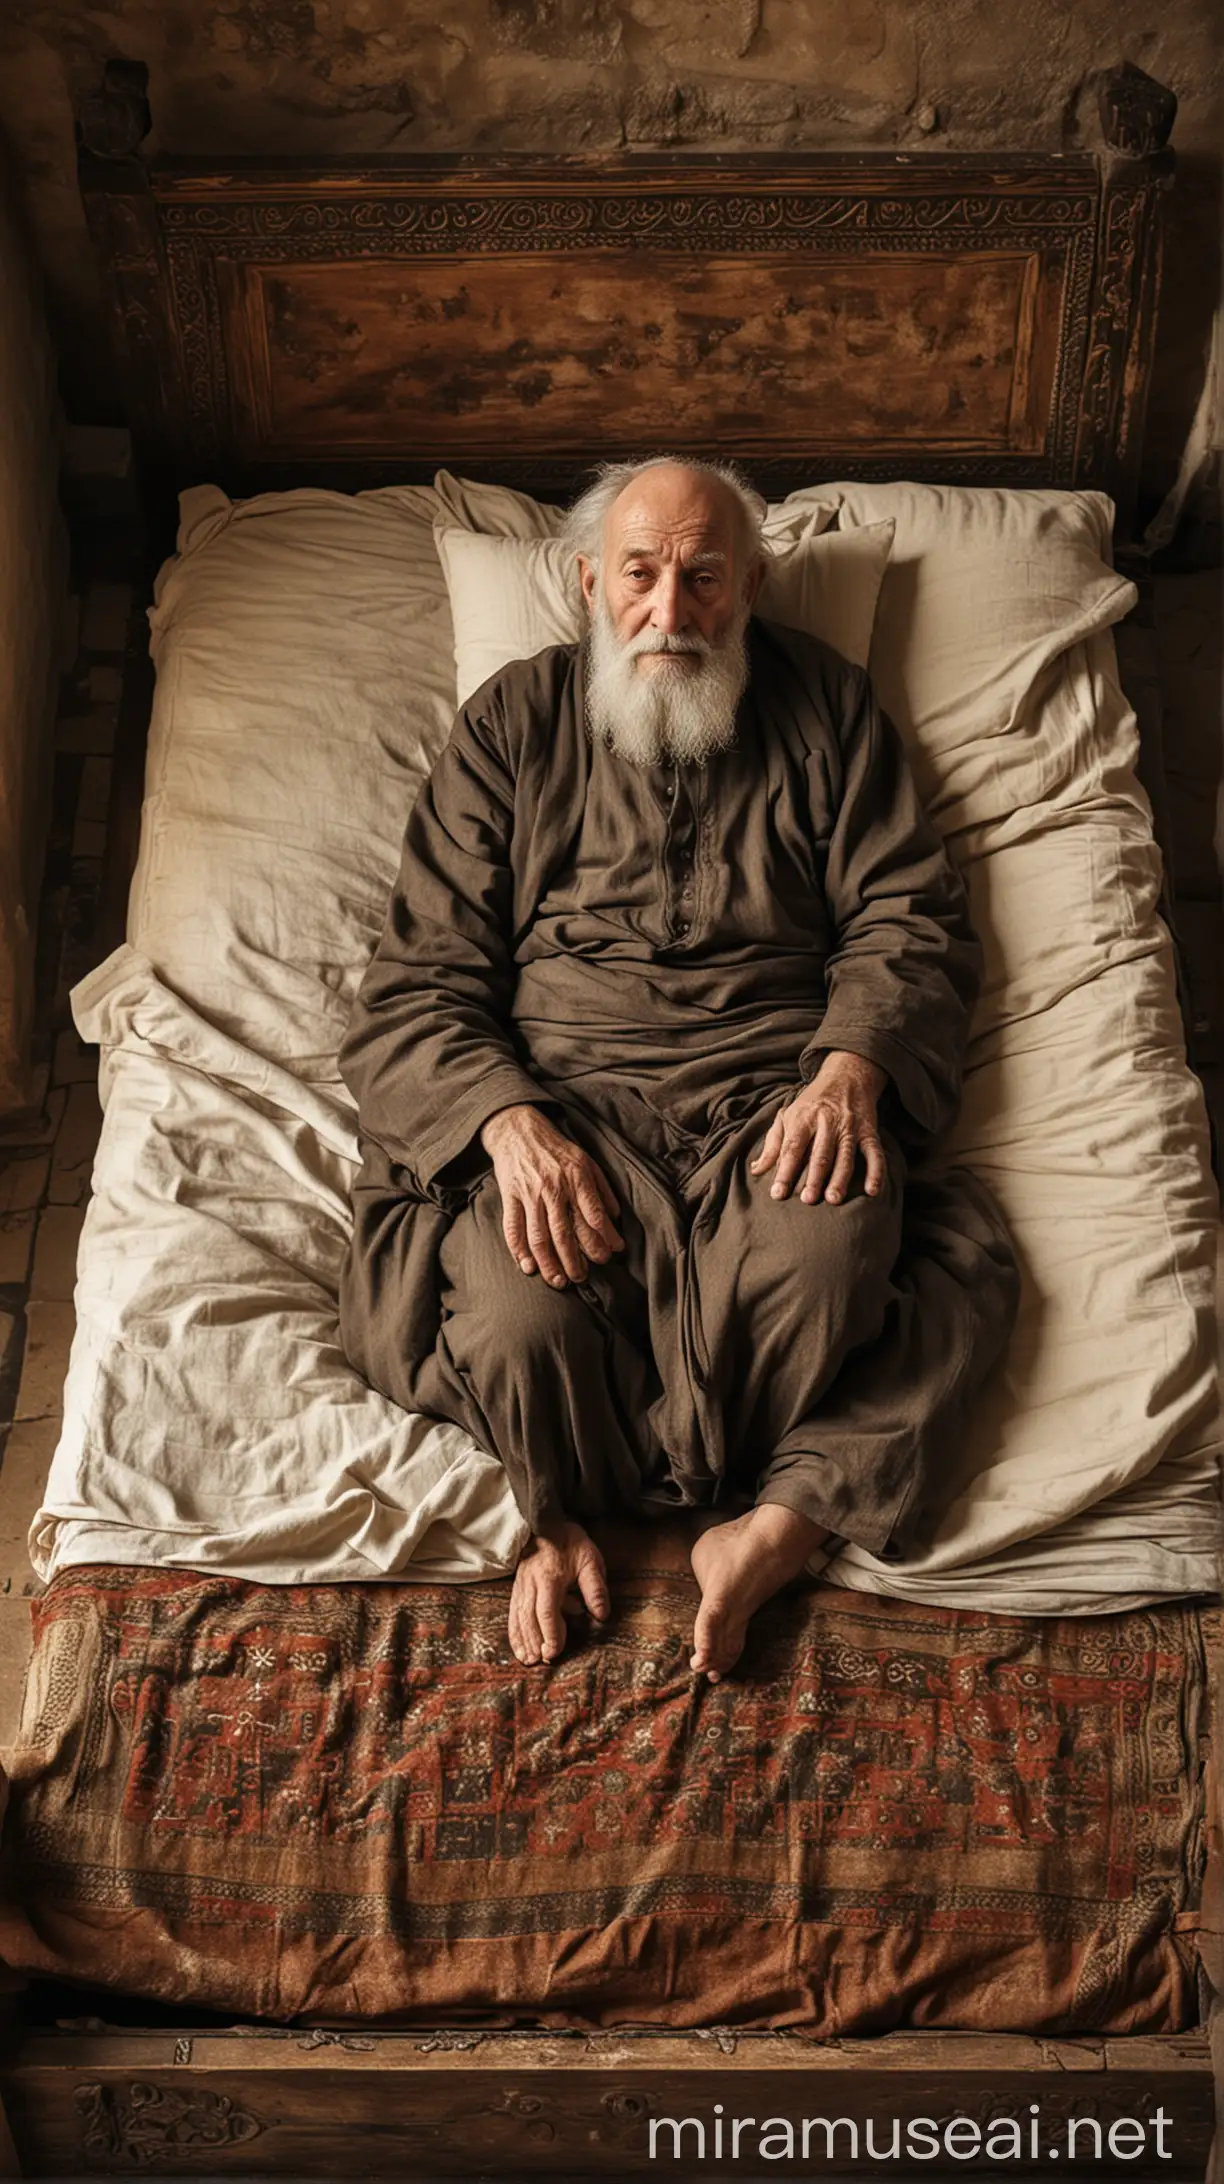 Elderly Jewish Man Resting on a Historic Bed